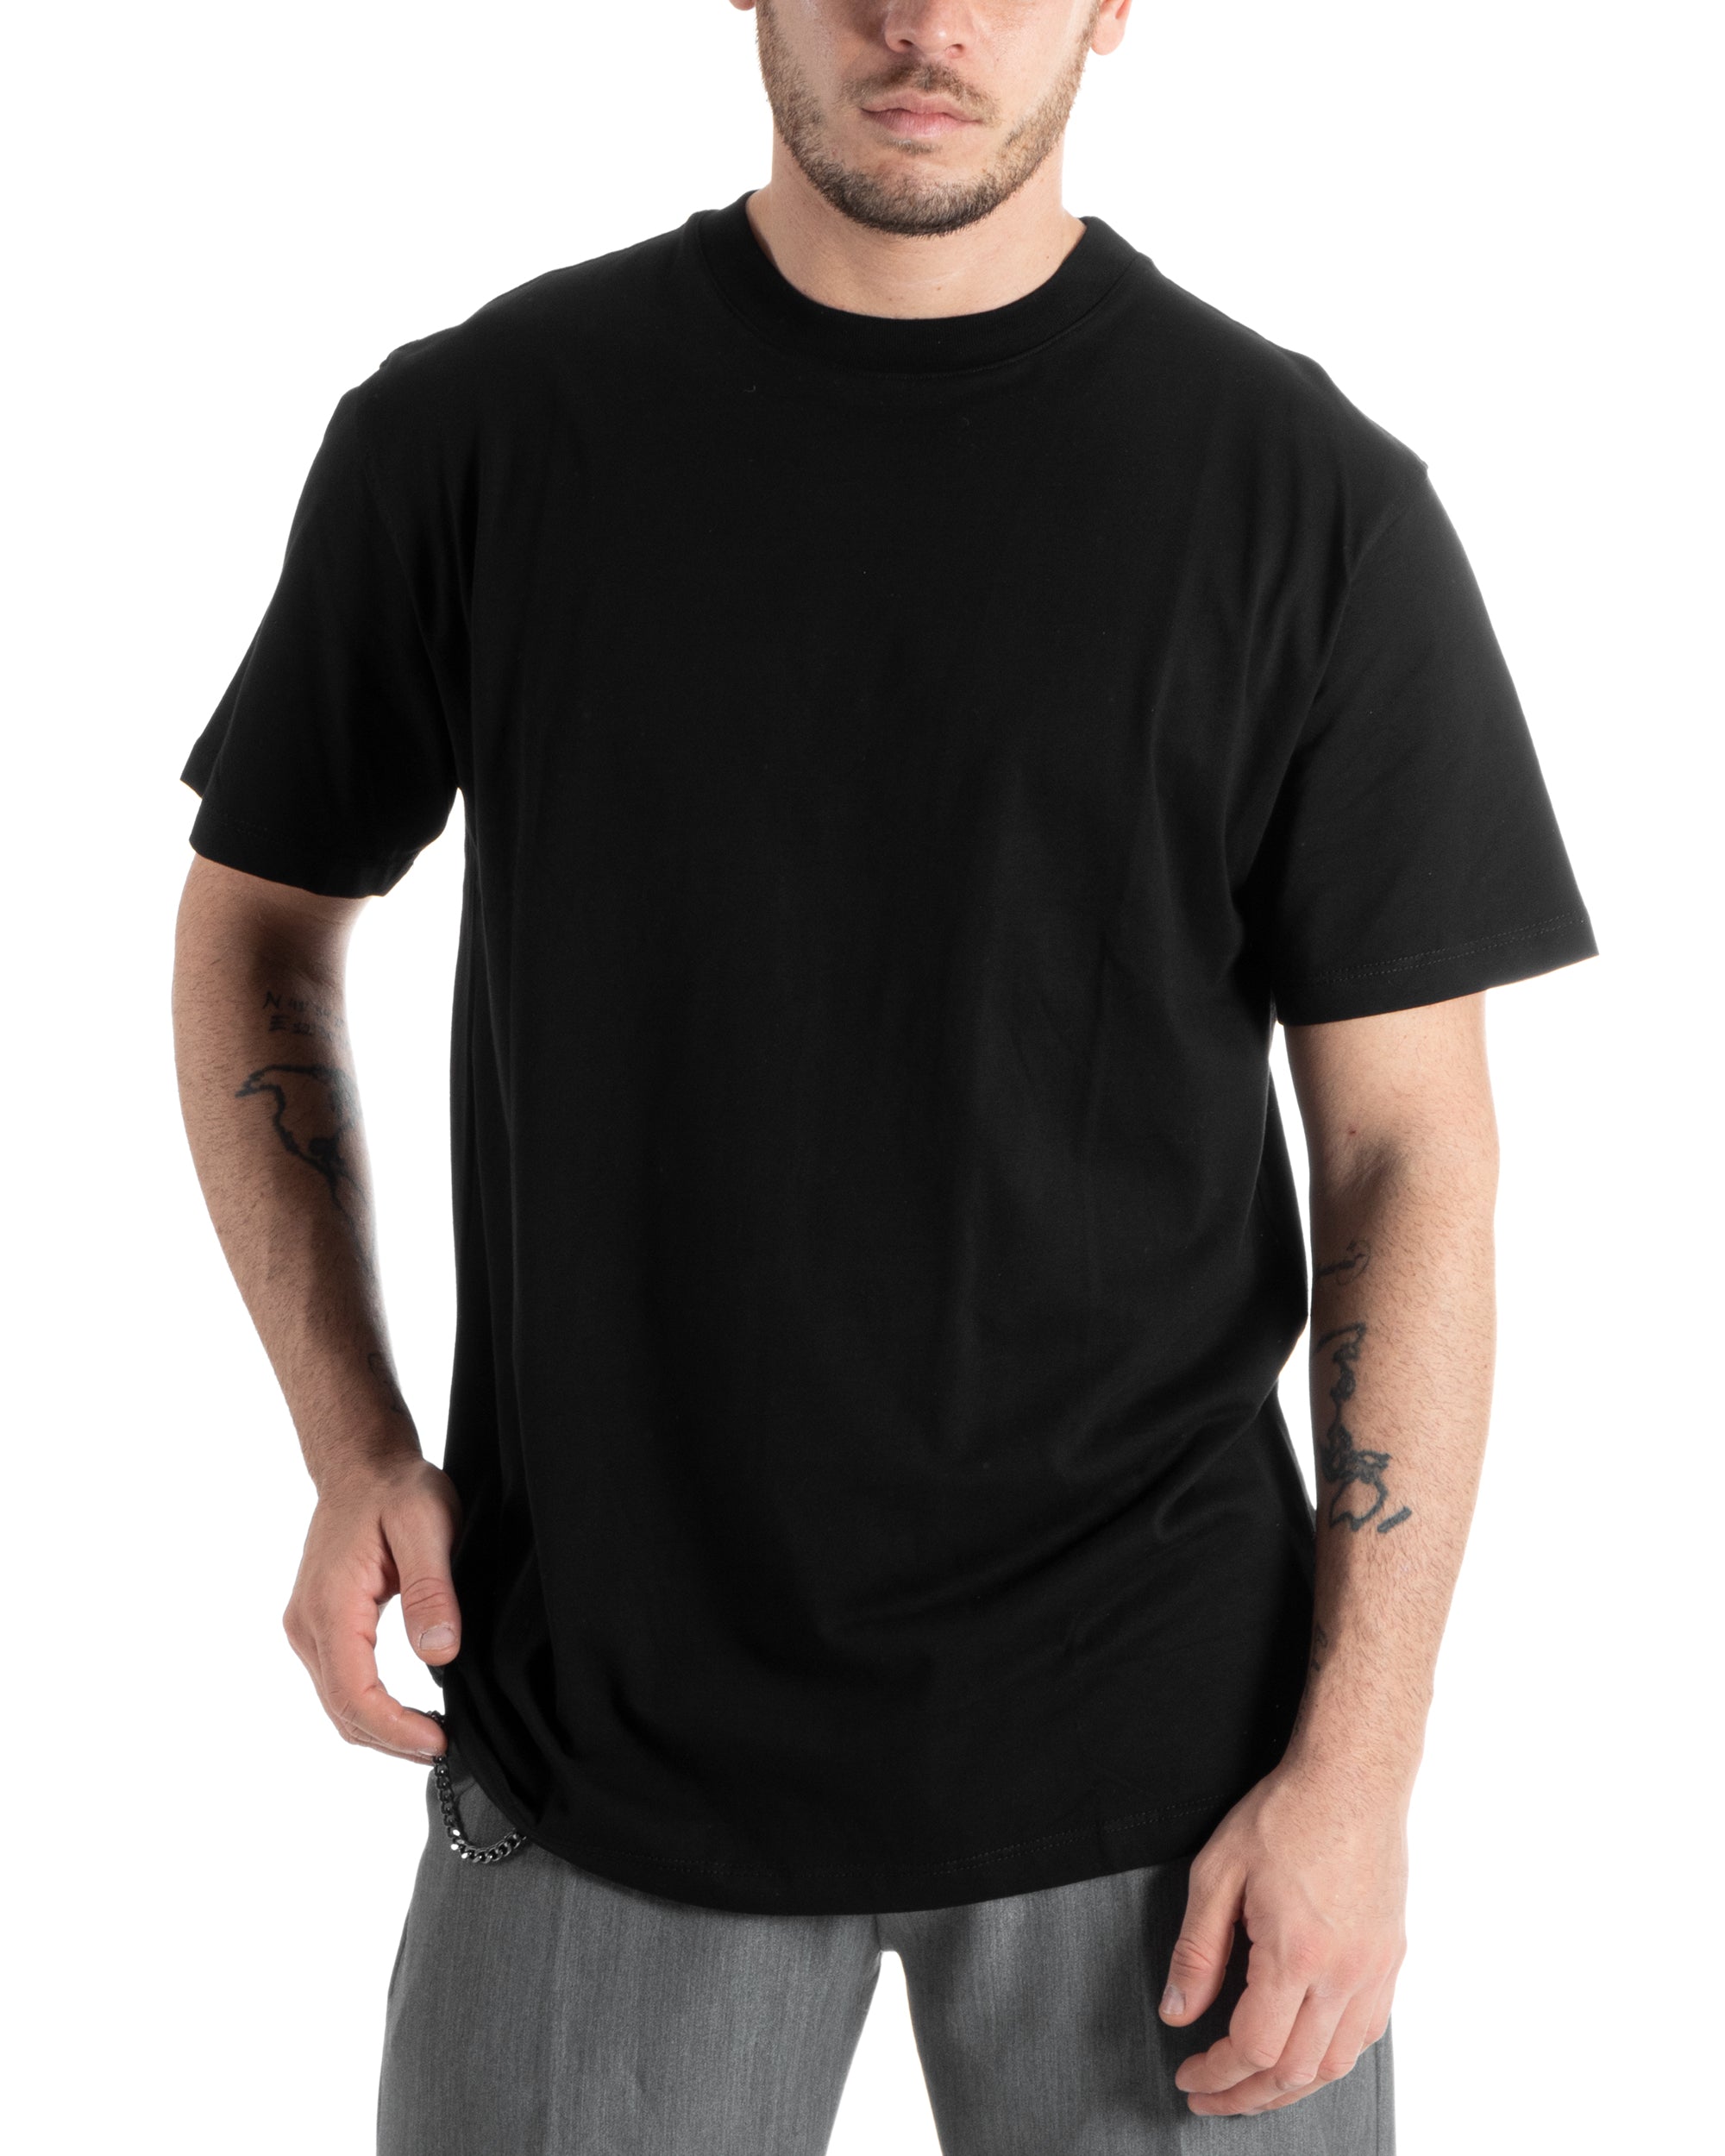 T-shirt Uomo Cotone Basic Tinta Unita Nero Girocollo Casual Gola Alta GIOSAL-TS2983A